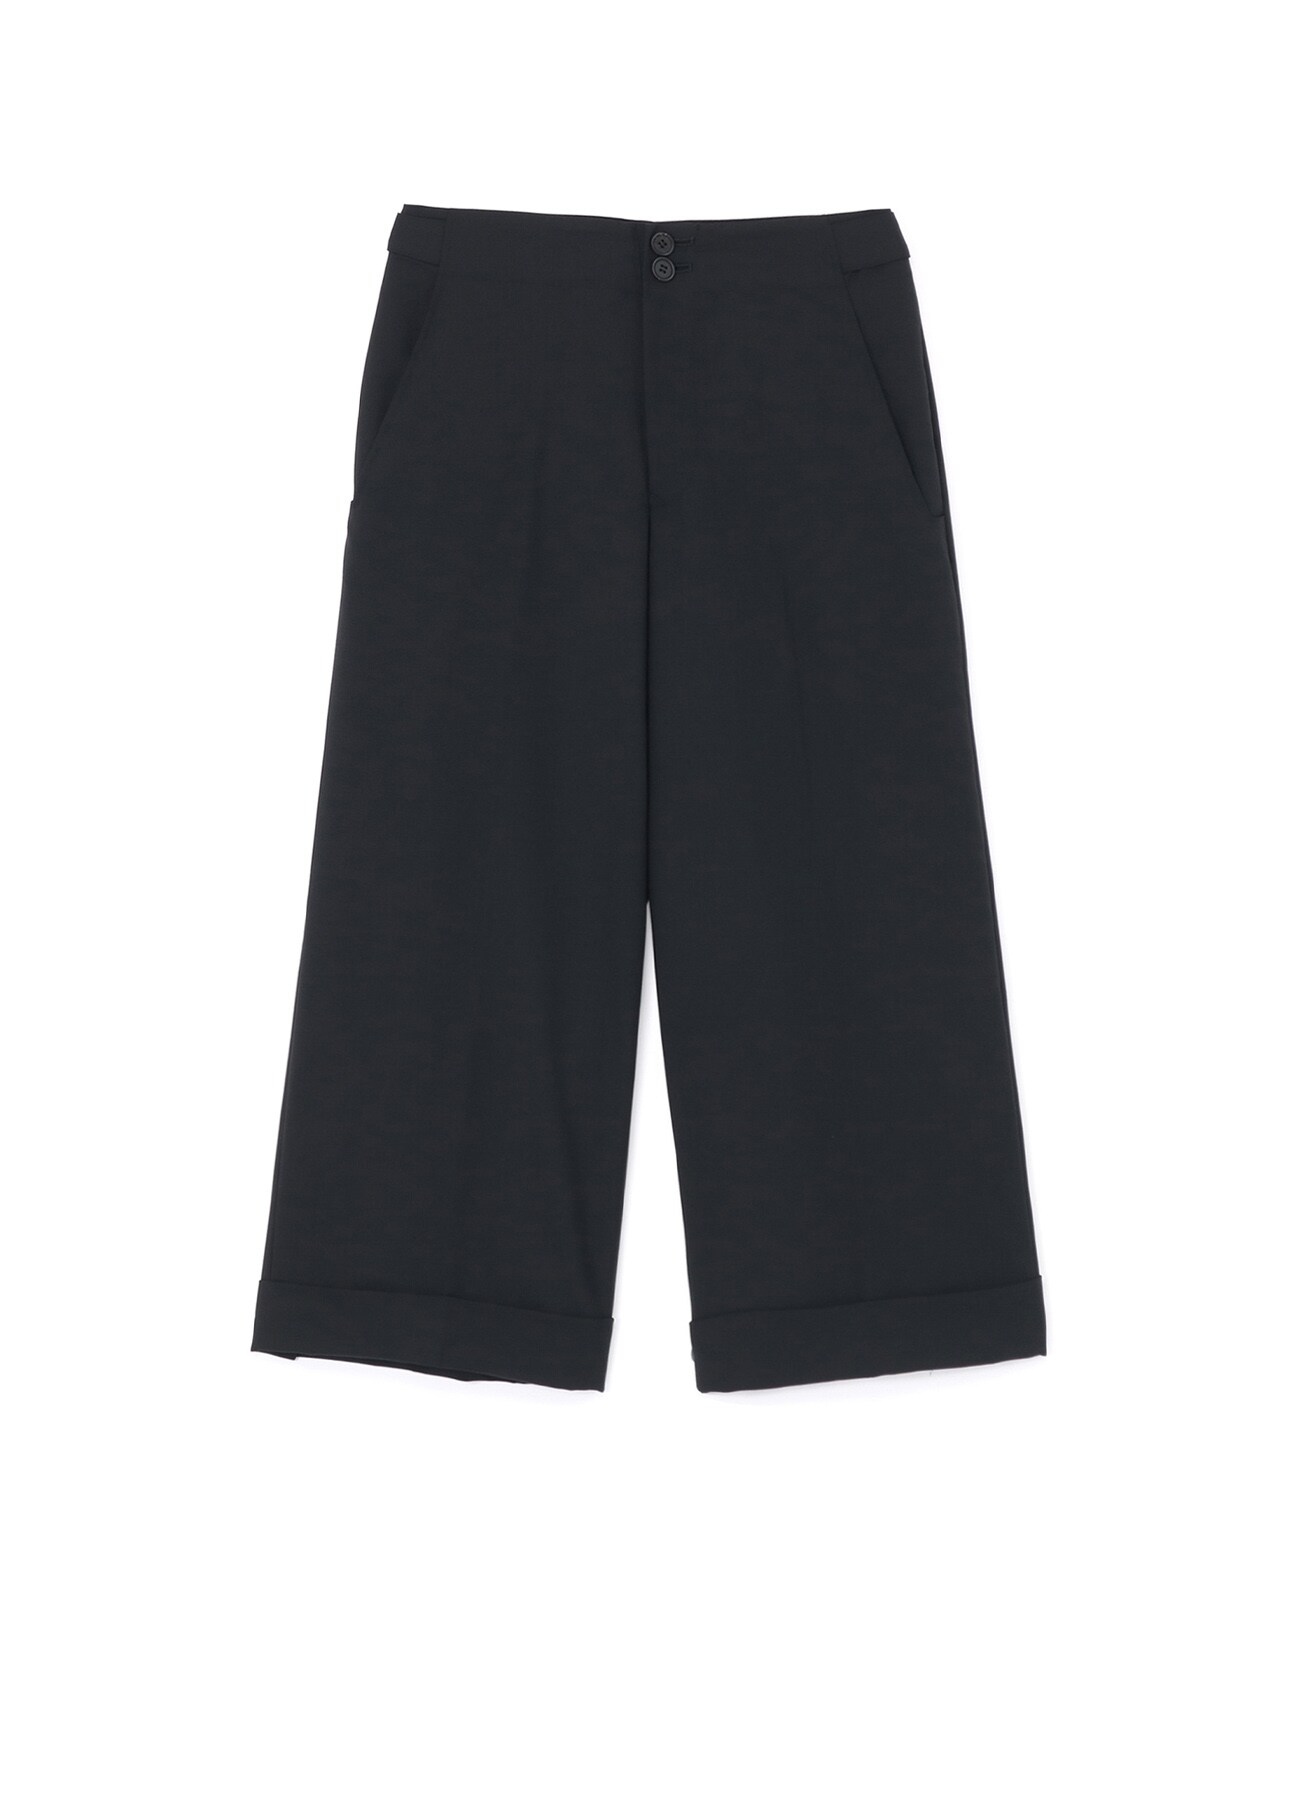 Yohji Yamamoto POUR HOMME Switched Layer Pants Trousers Black 5  PLAYFUL